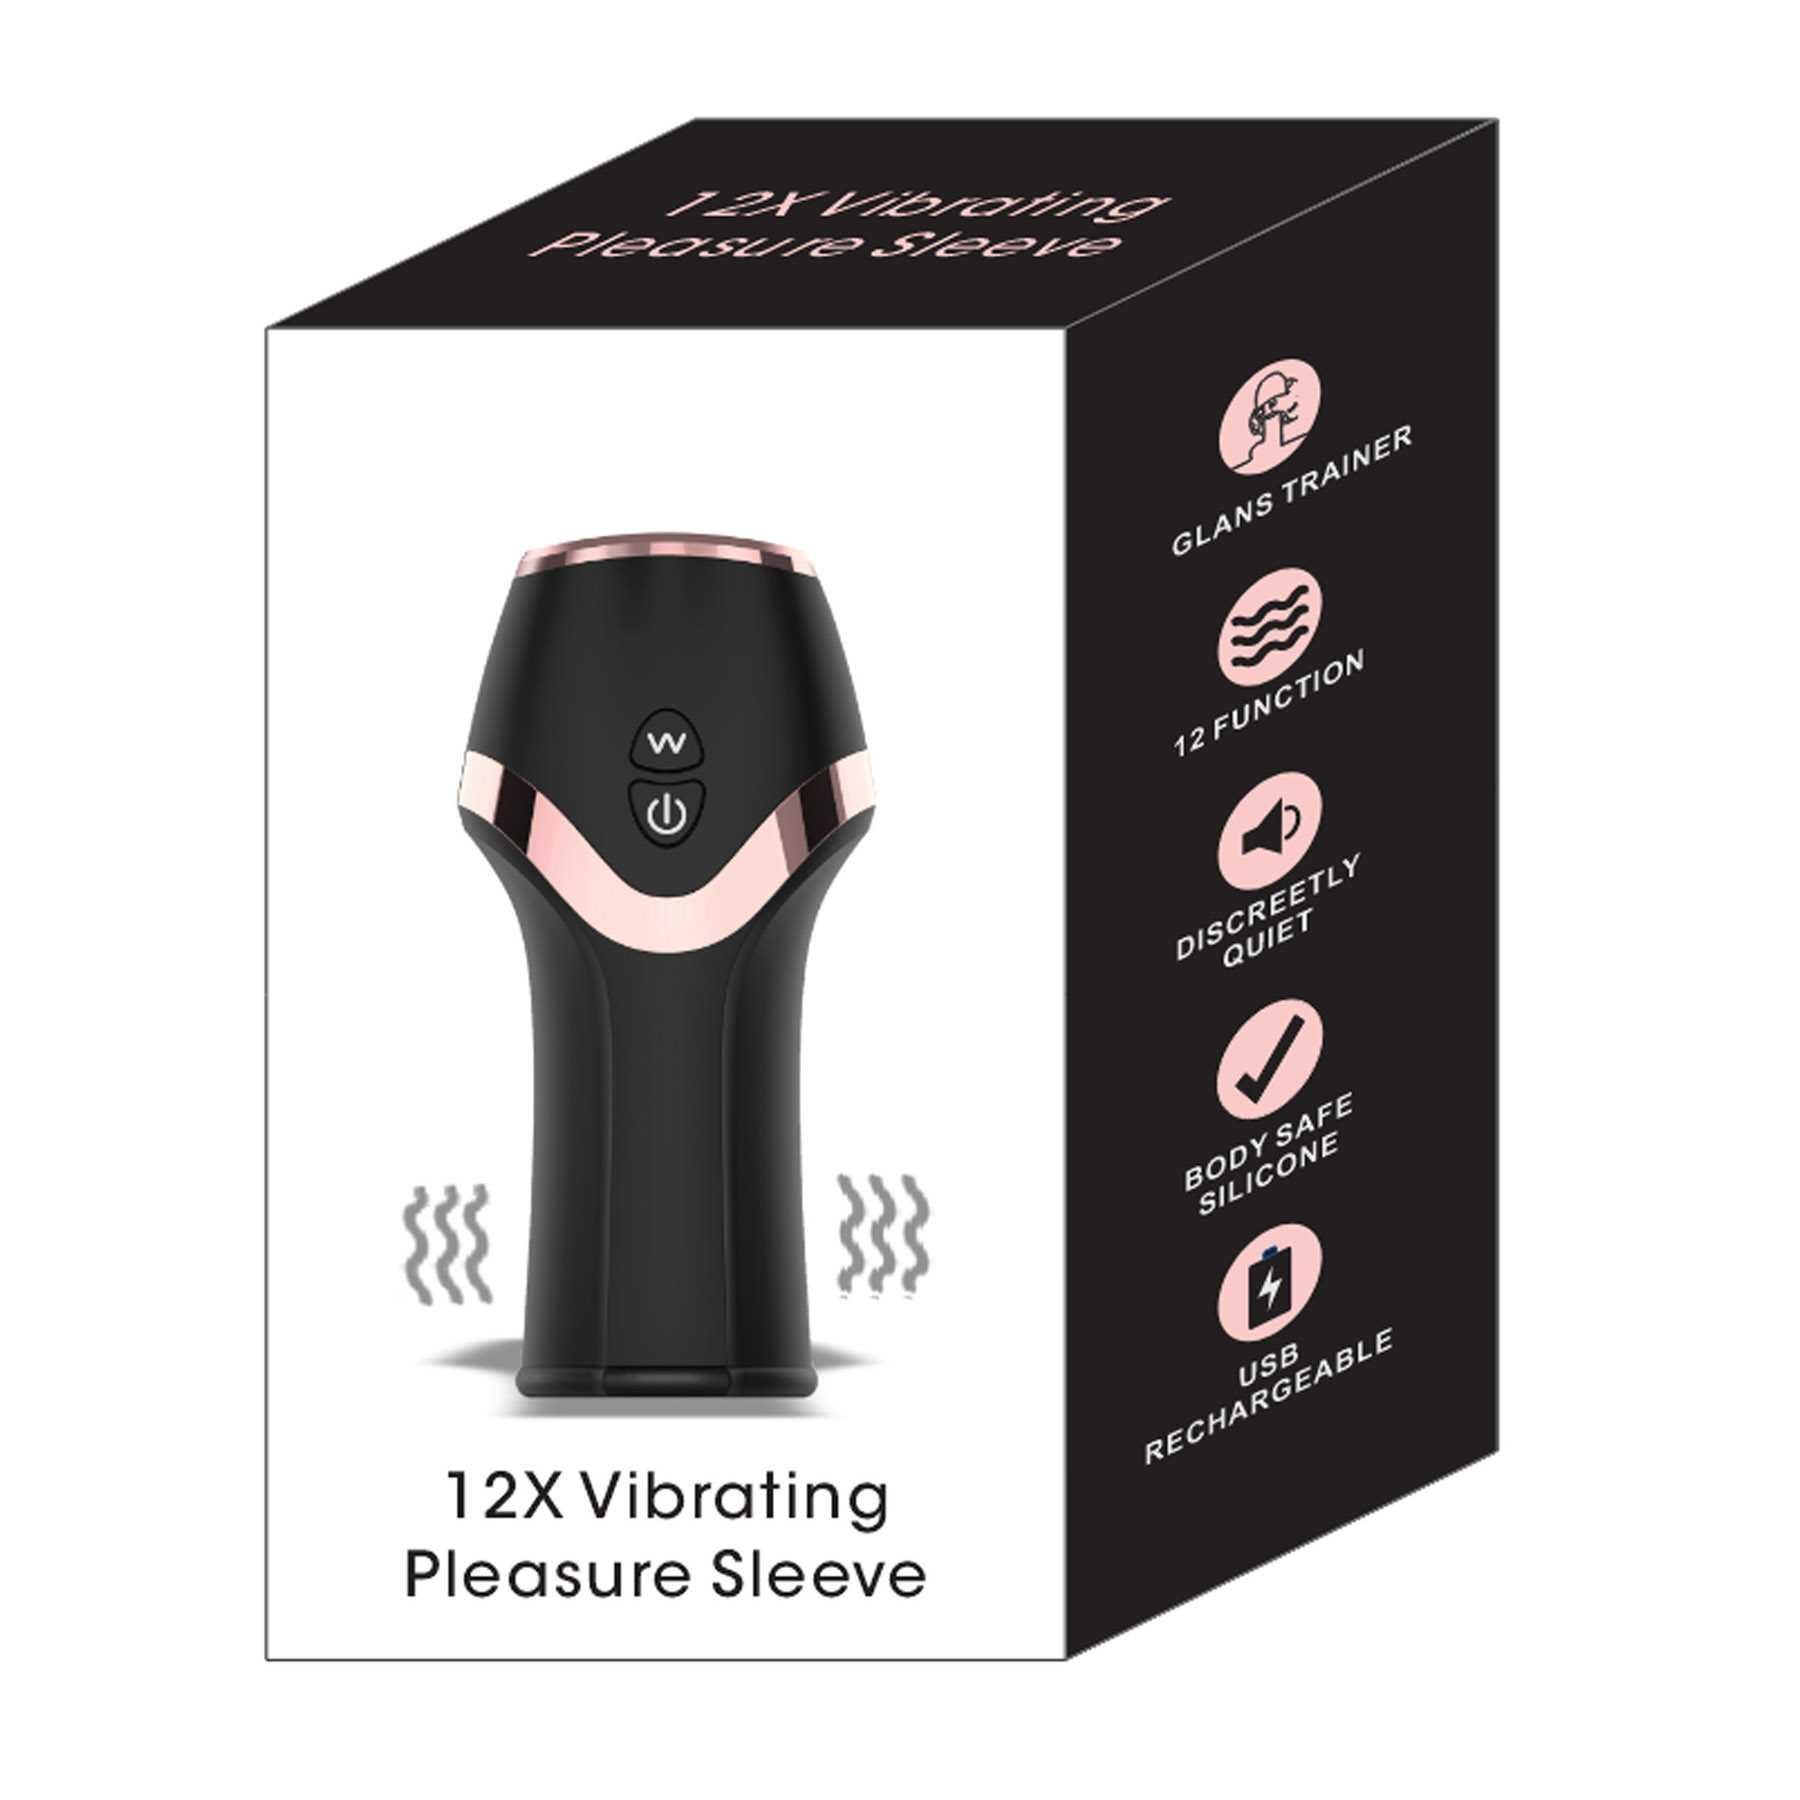 12X VIBRATING PLEASURE SLEEVE box